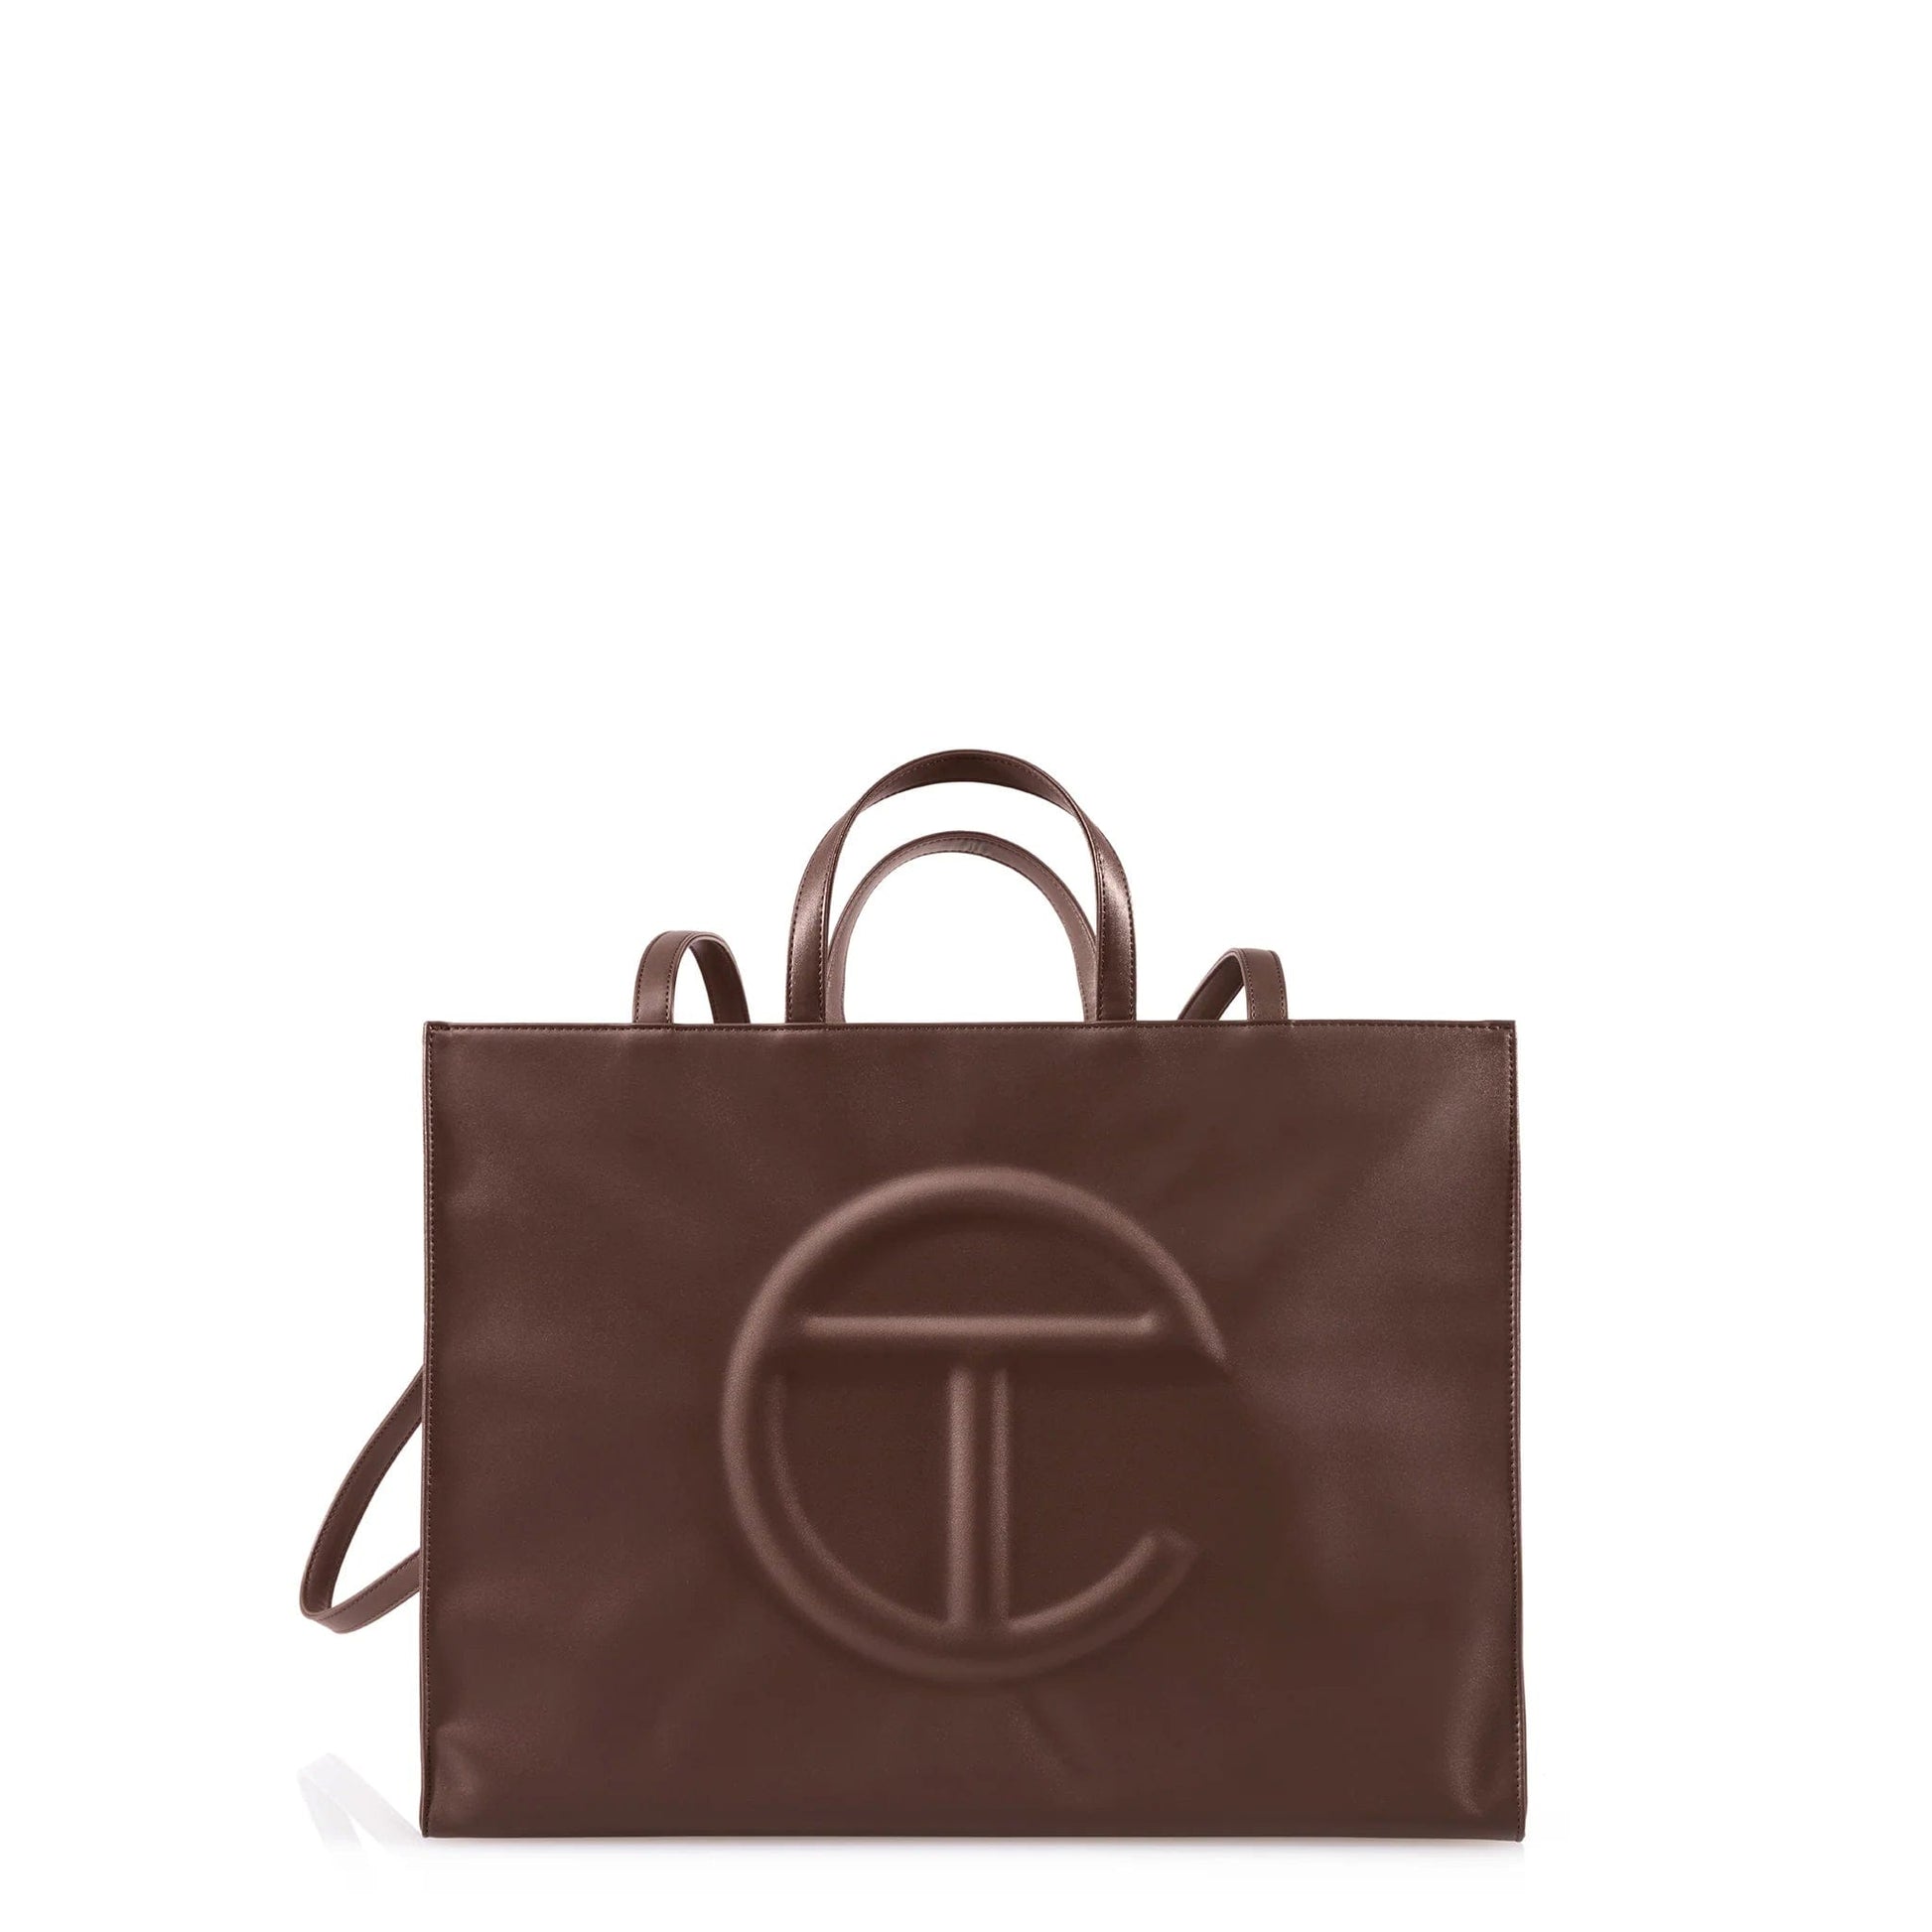 Telfar Shopping Bag Chocolate - Large